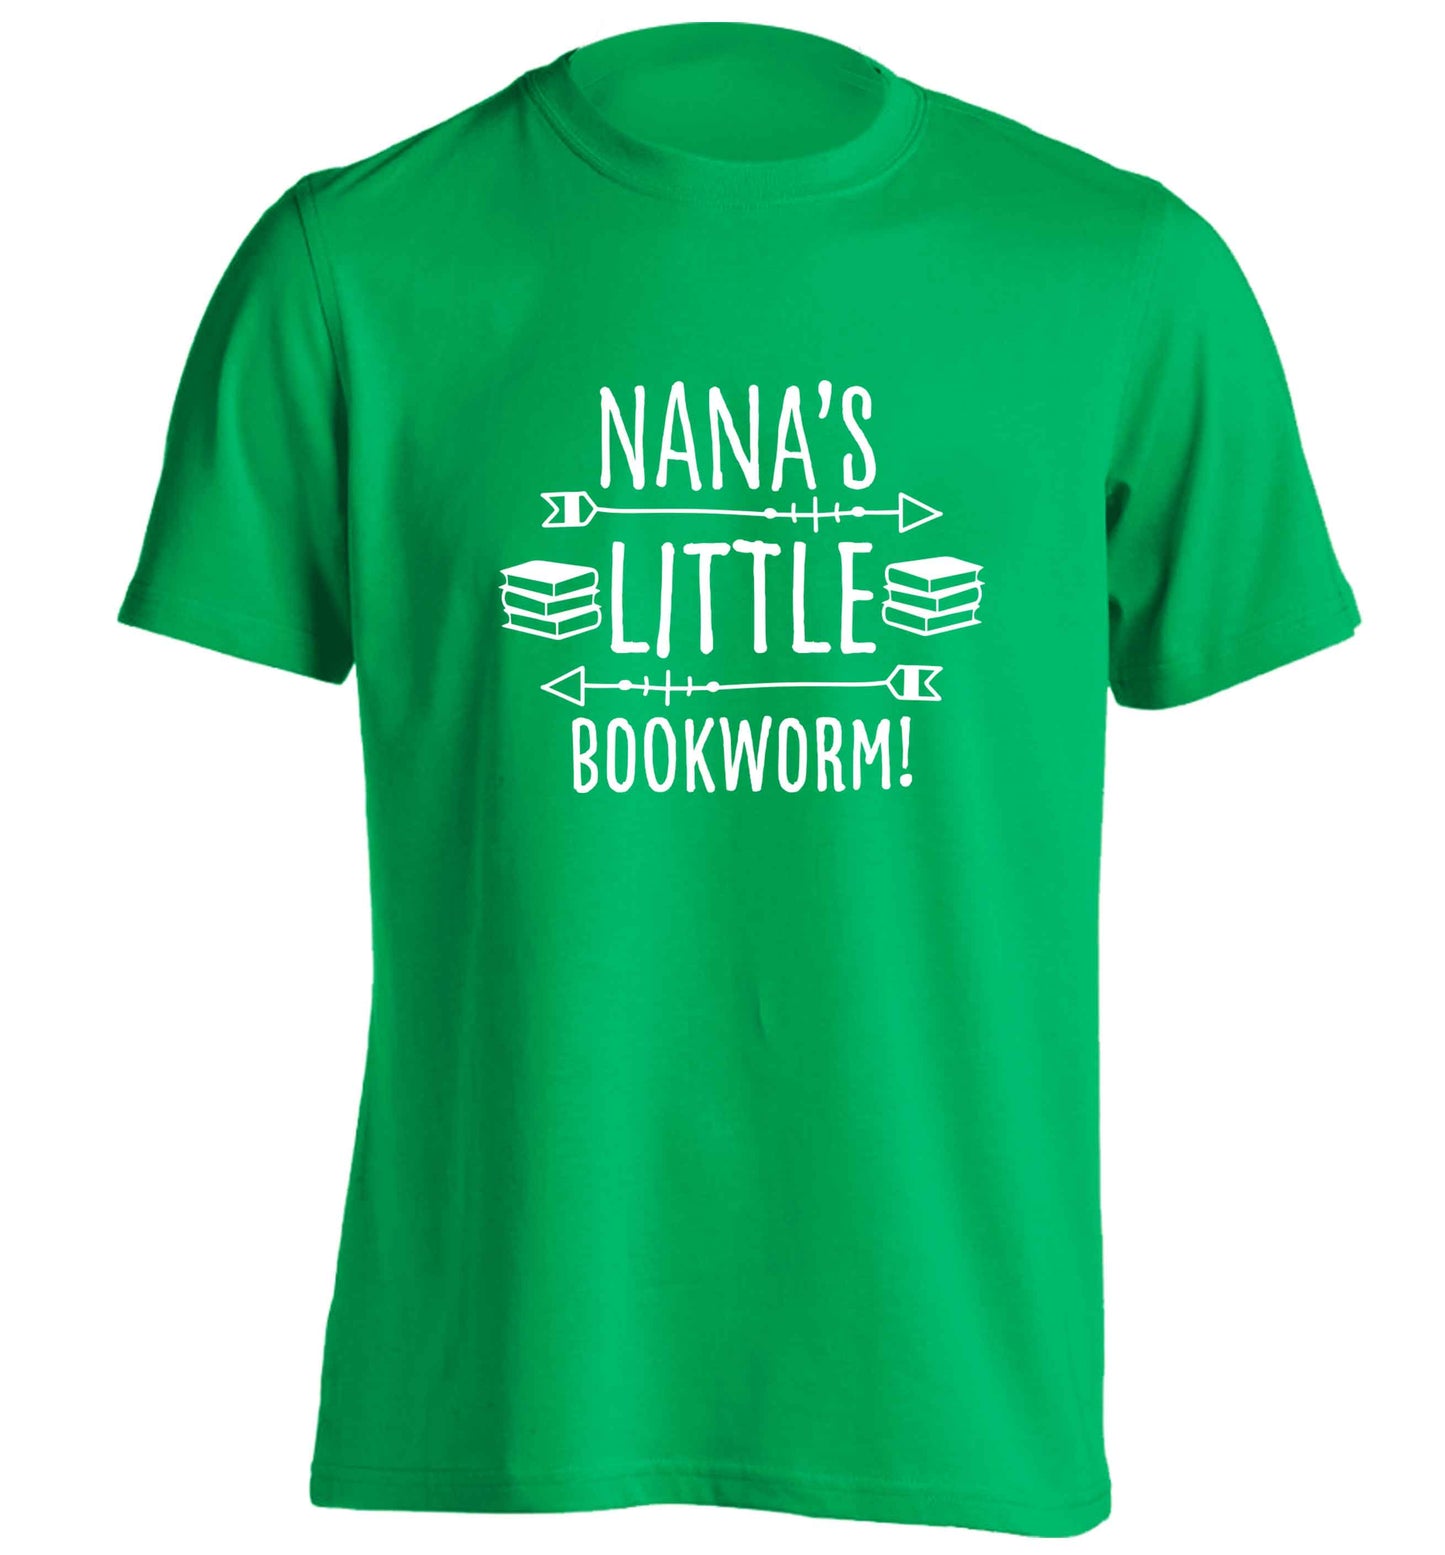 Nana's little bookworm adults unisex green Tshirt 2XL